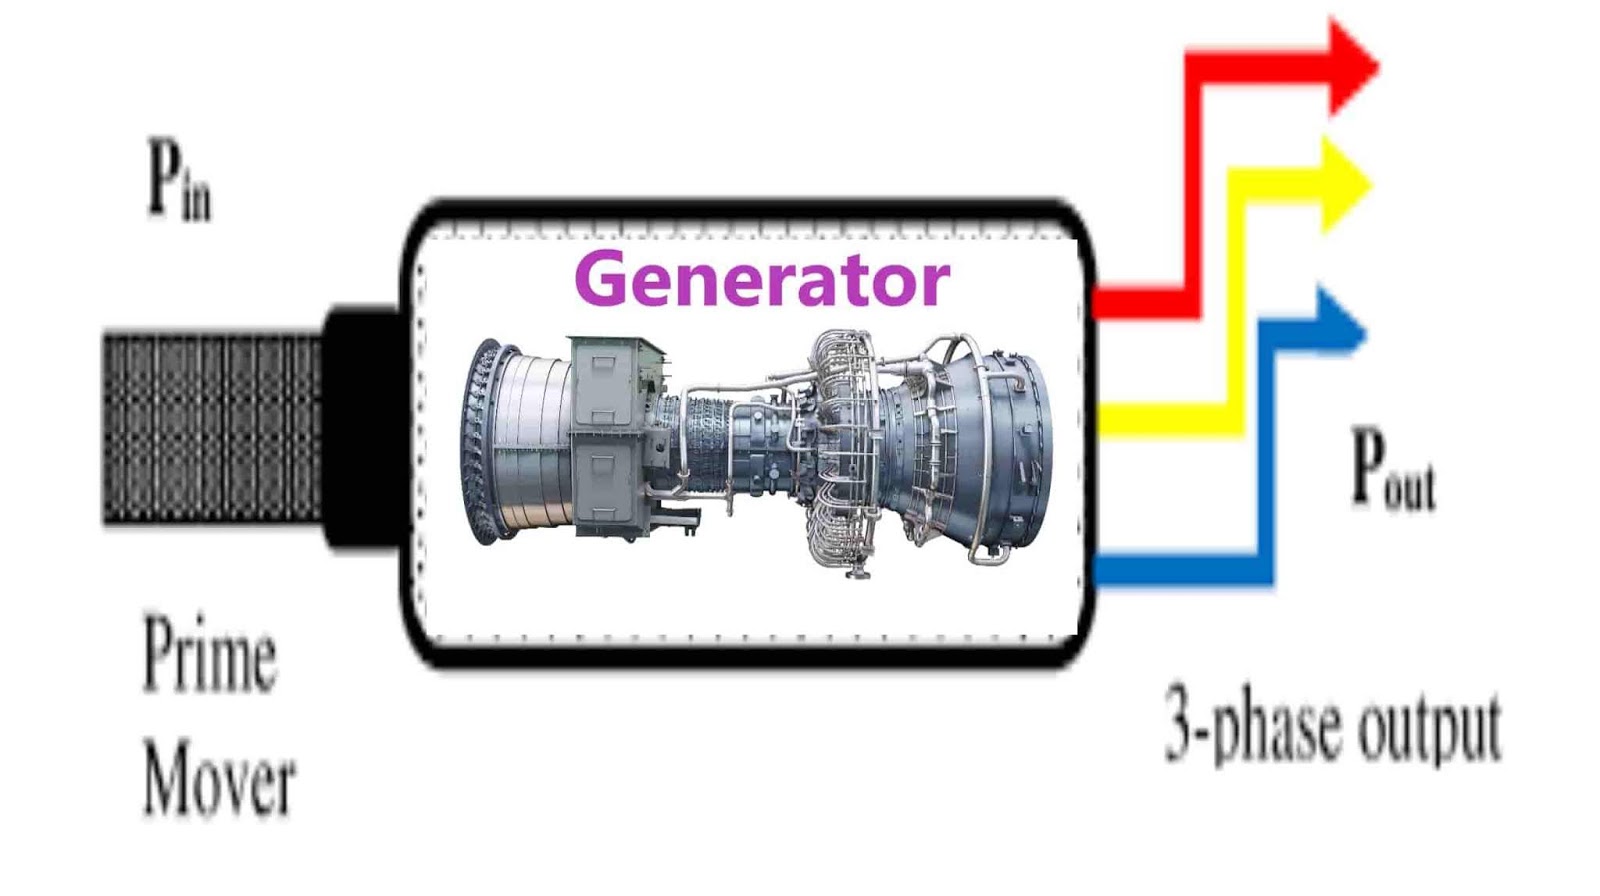 1. Priming The Generator